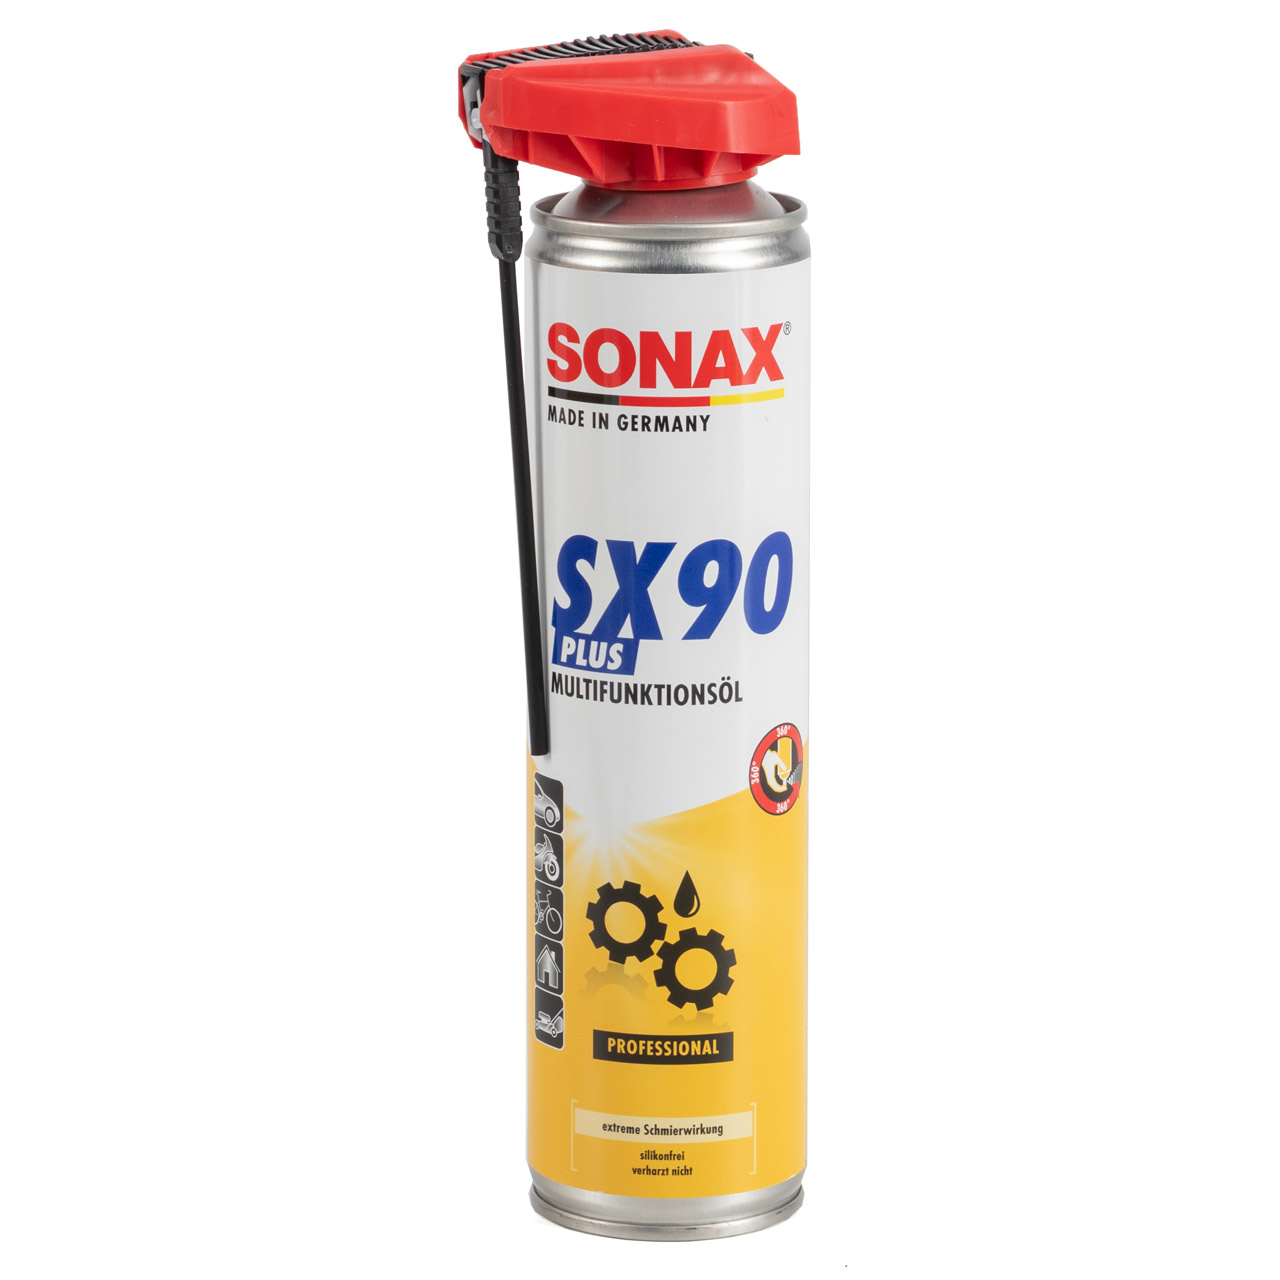 SONAX SX90 PLUS Multifunktionsspray Universalspray Multifunktionsöl 400 ml